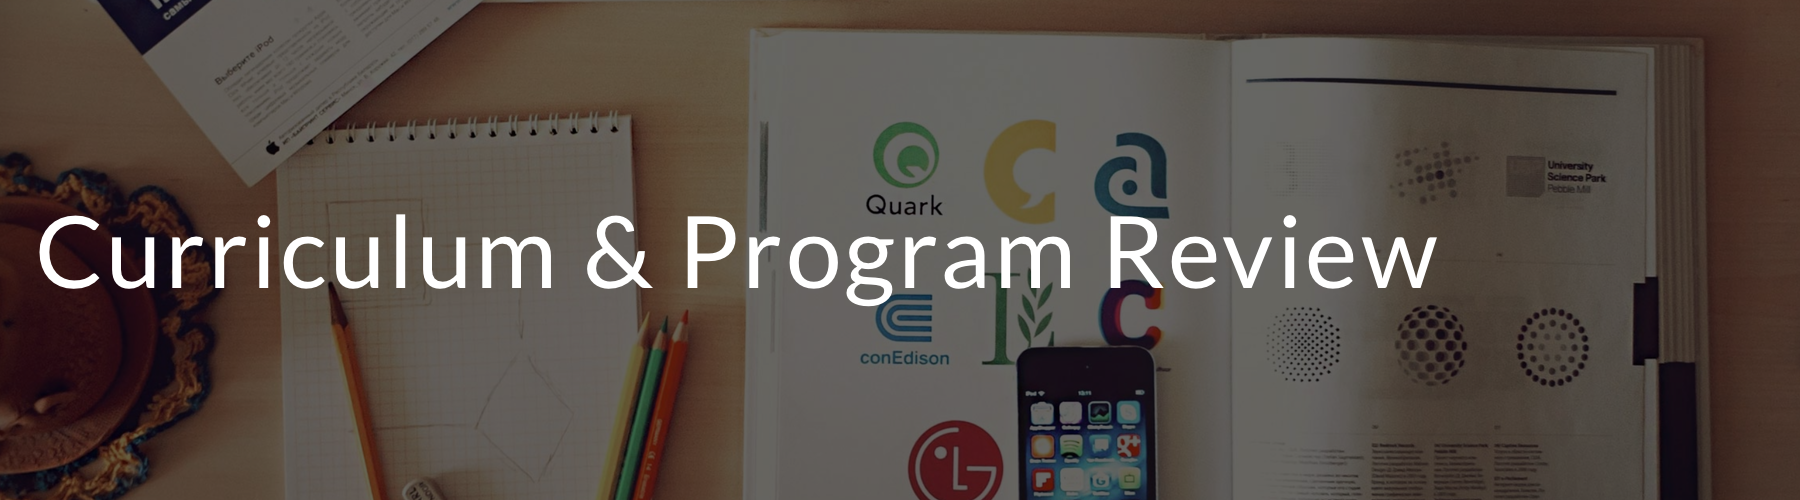 Curriculum & Program Review